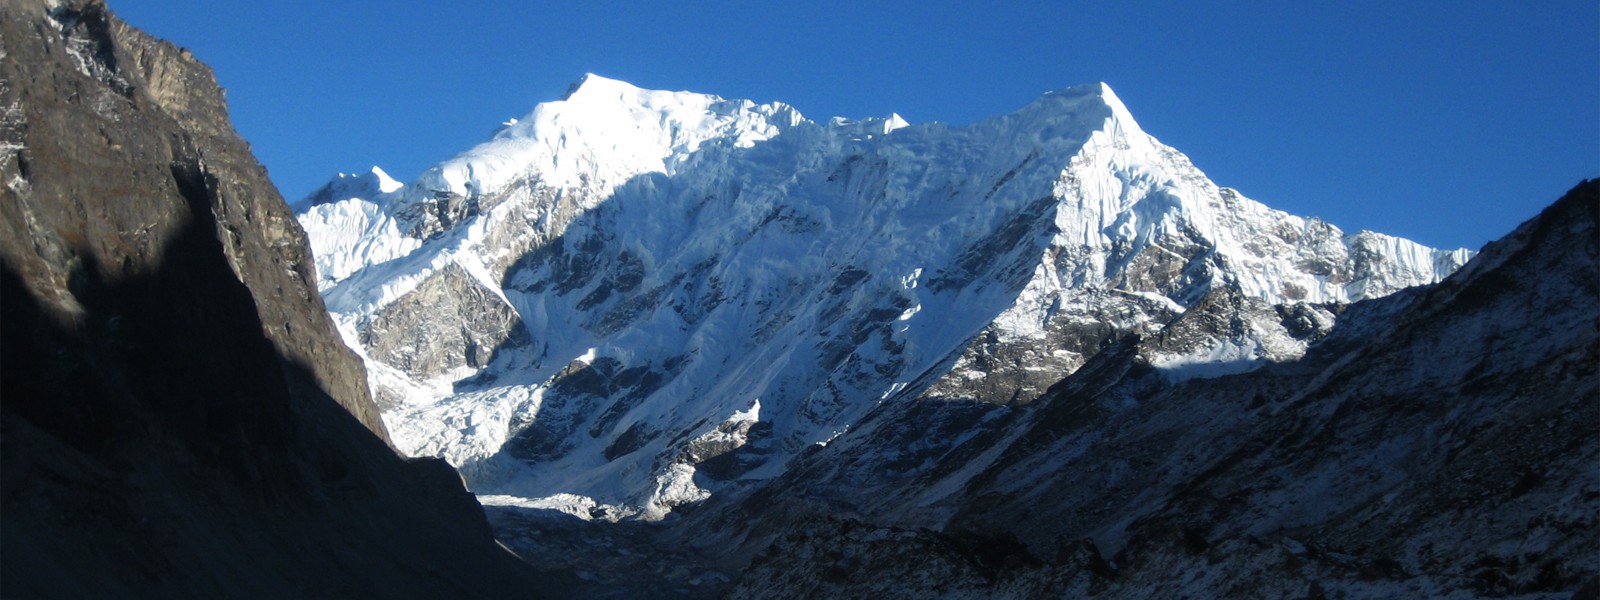 Rolwaling Tashi Lapcha High Passes with Everest Region